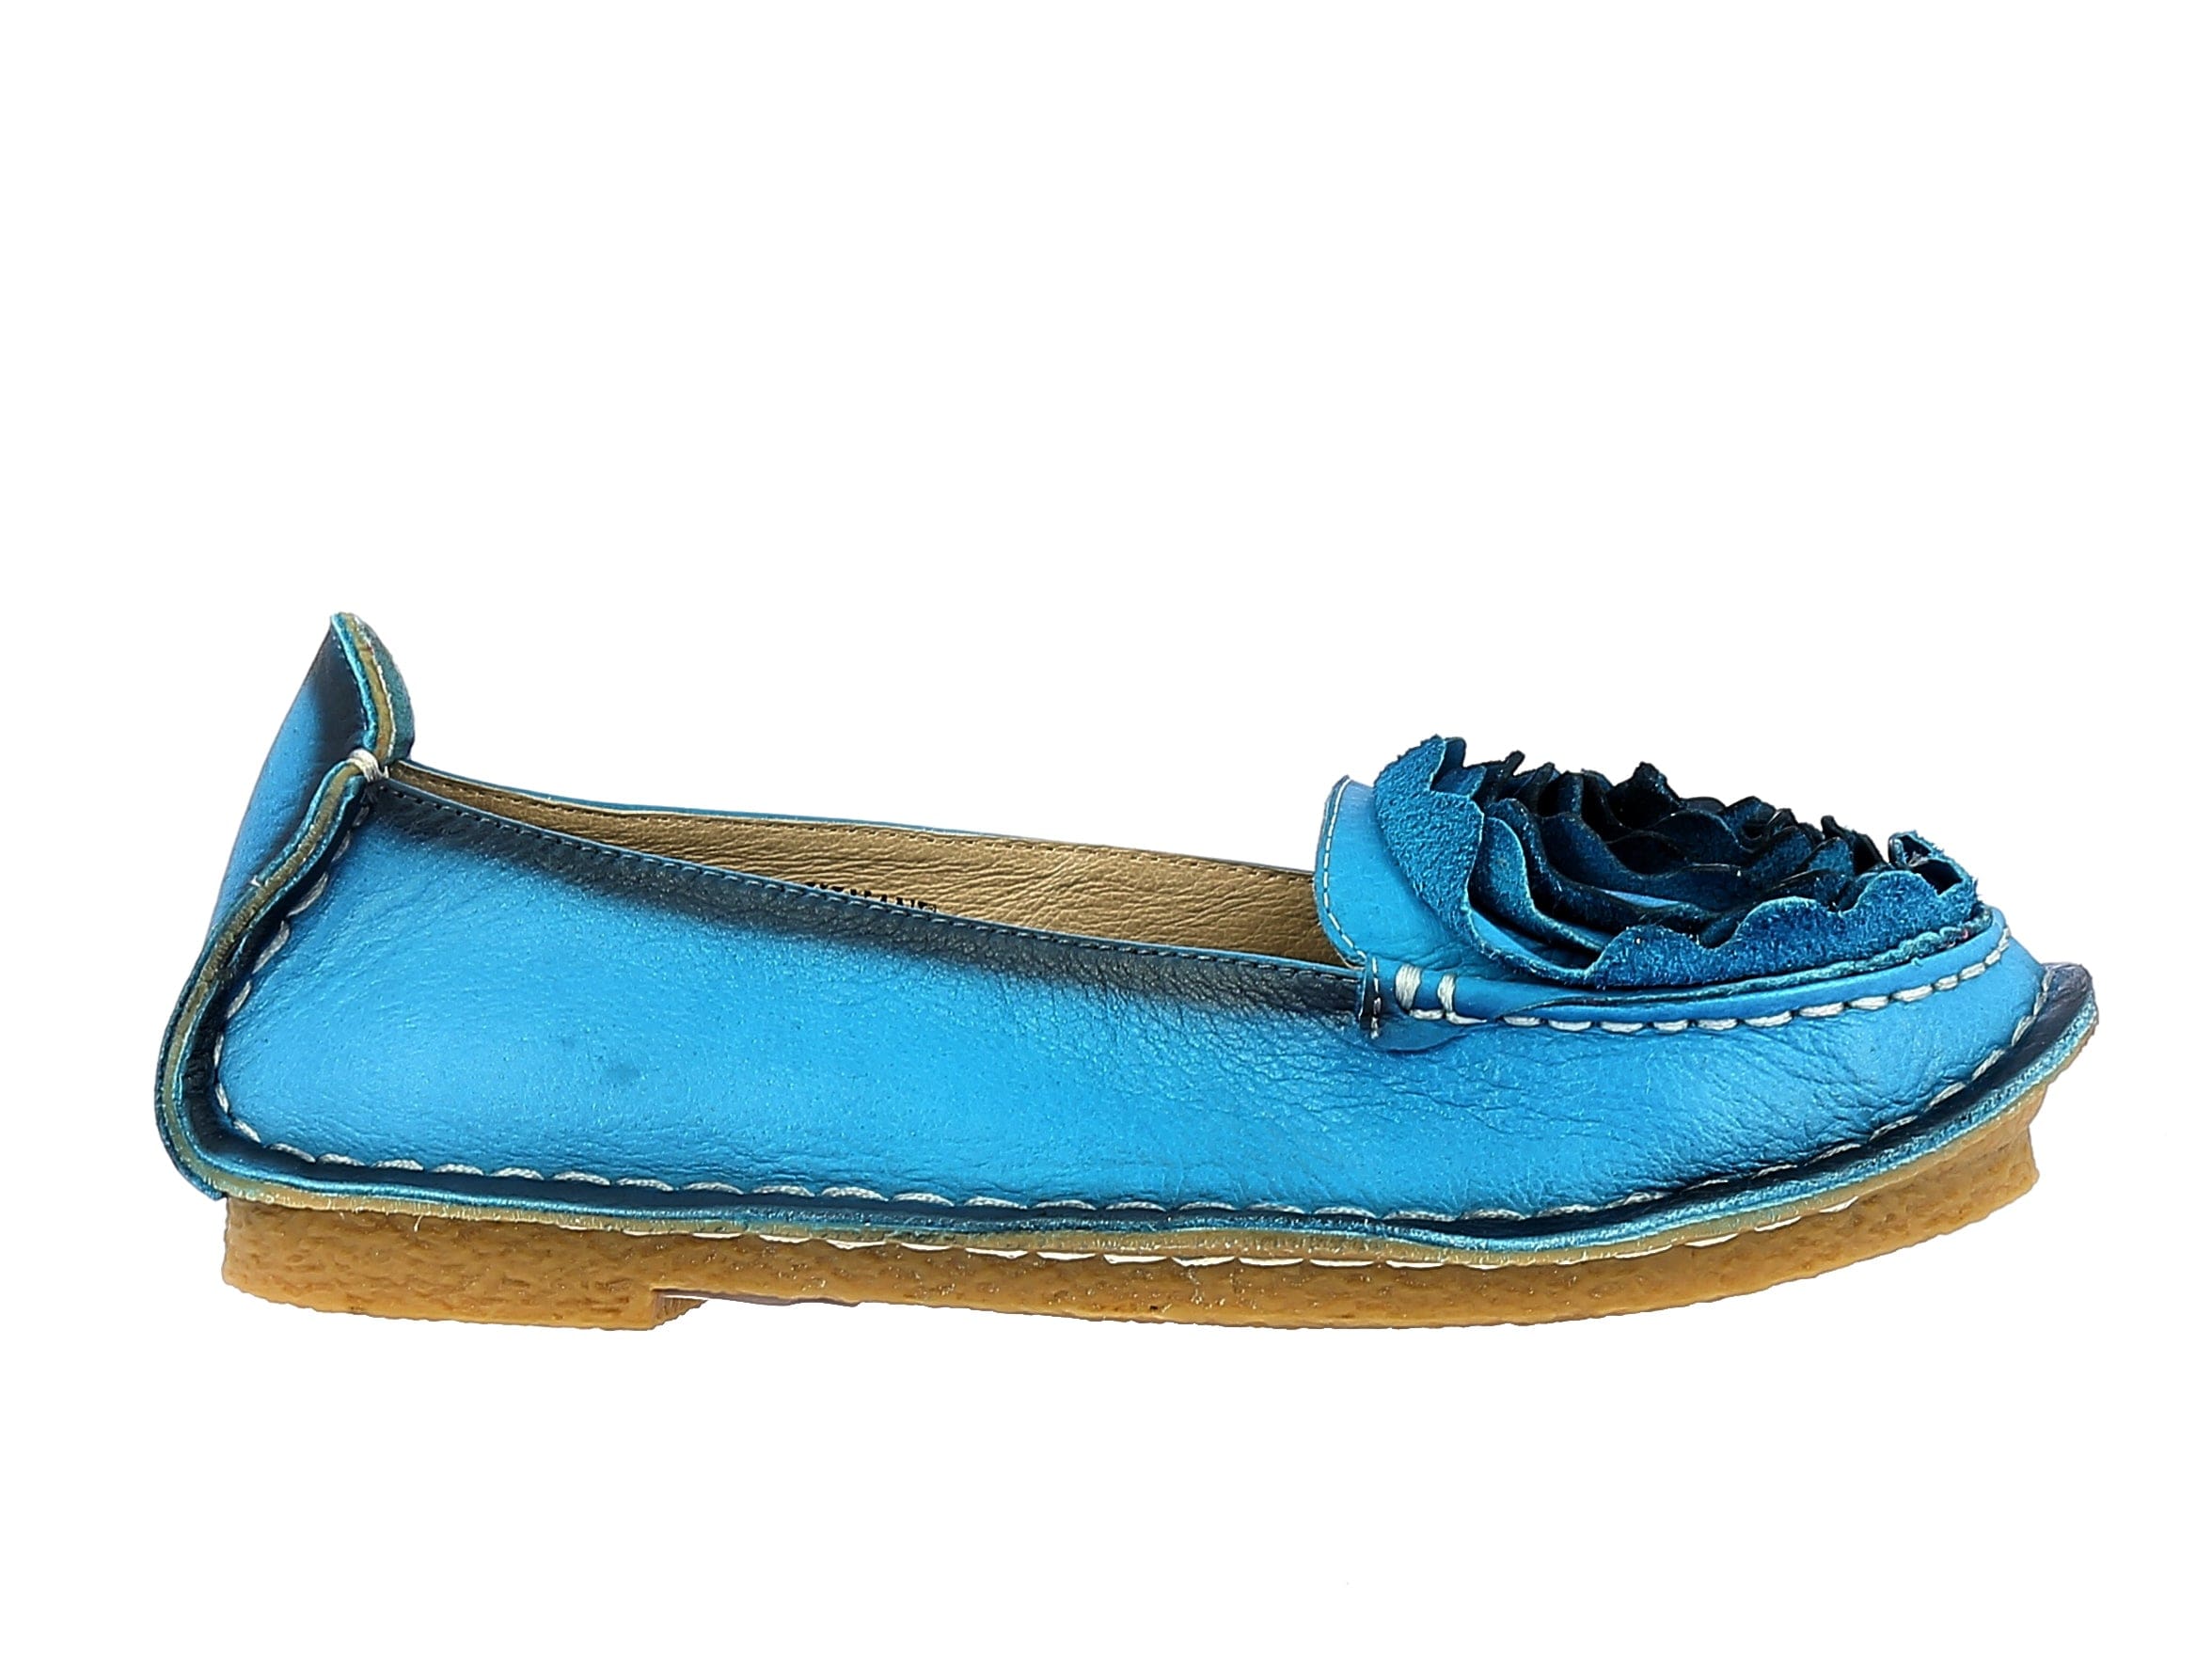 Chaussures Viviane - 37 / Turquoise - Mocassin